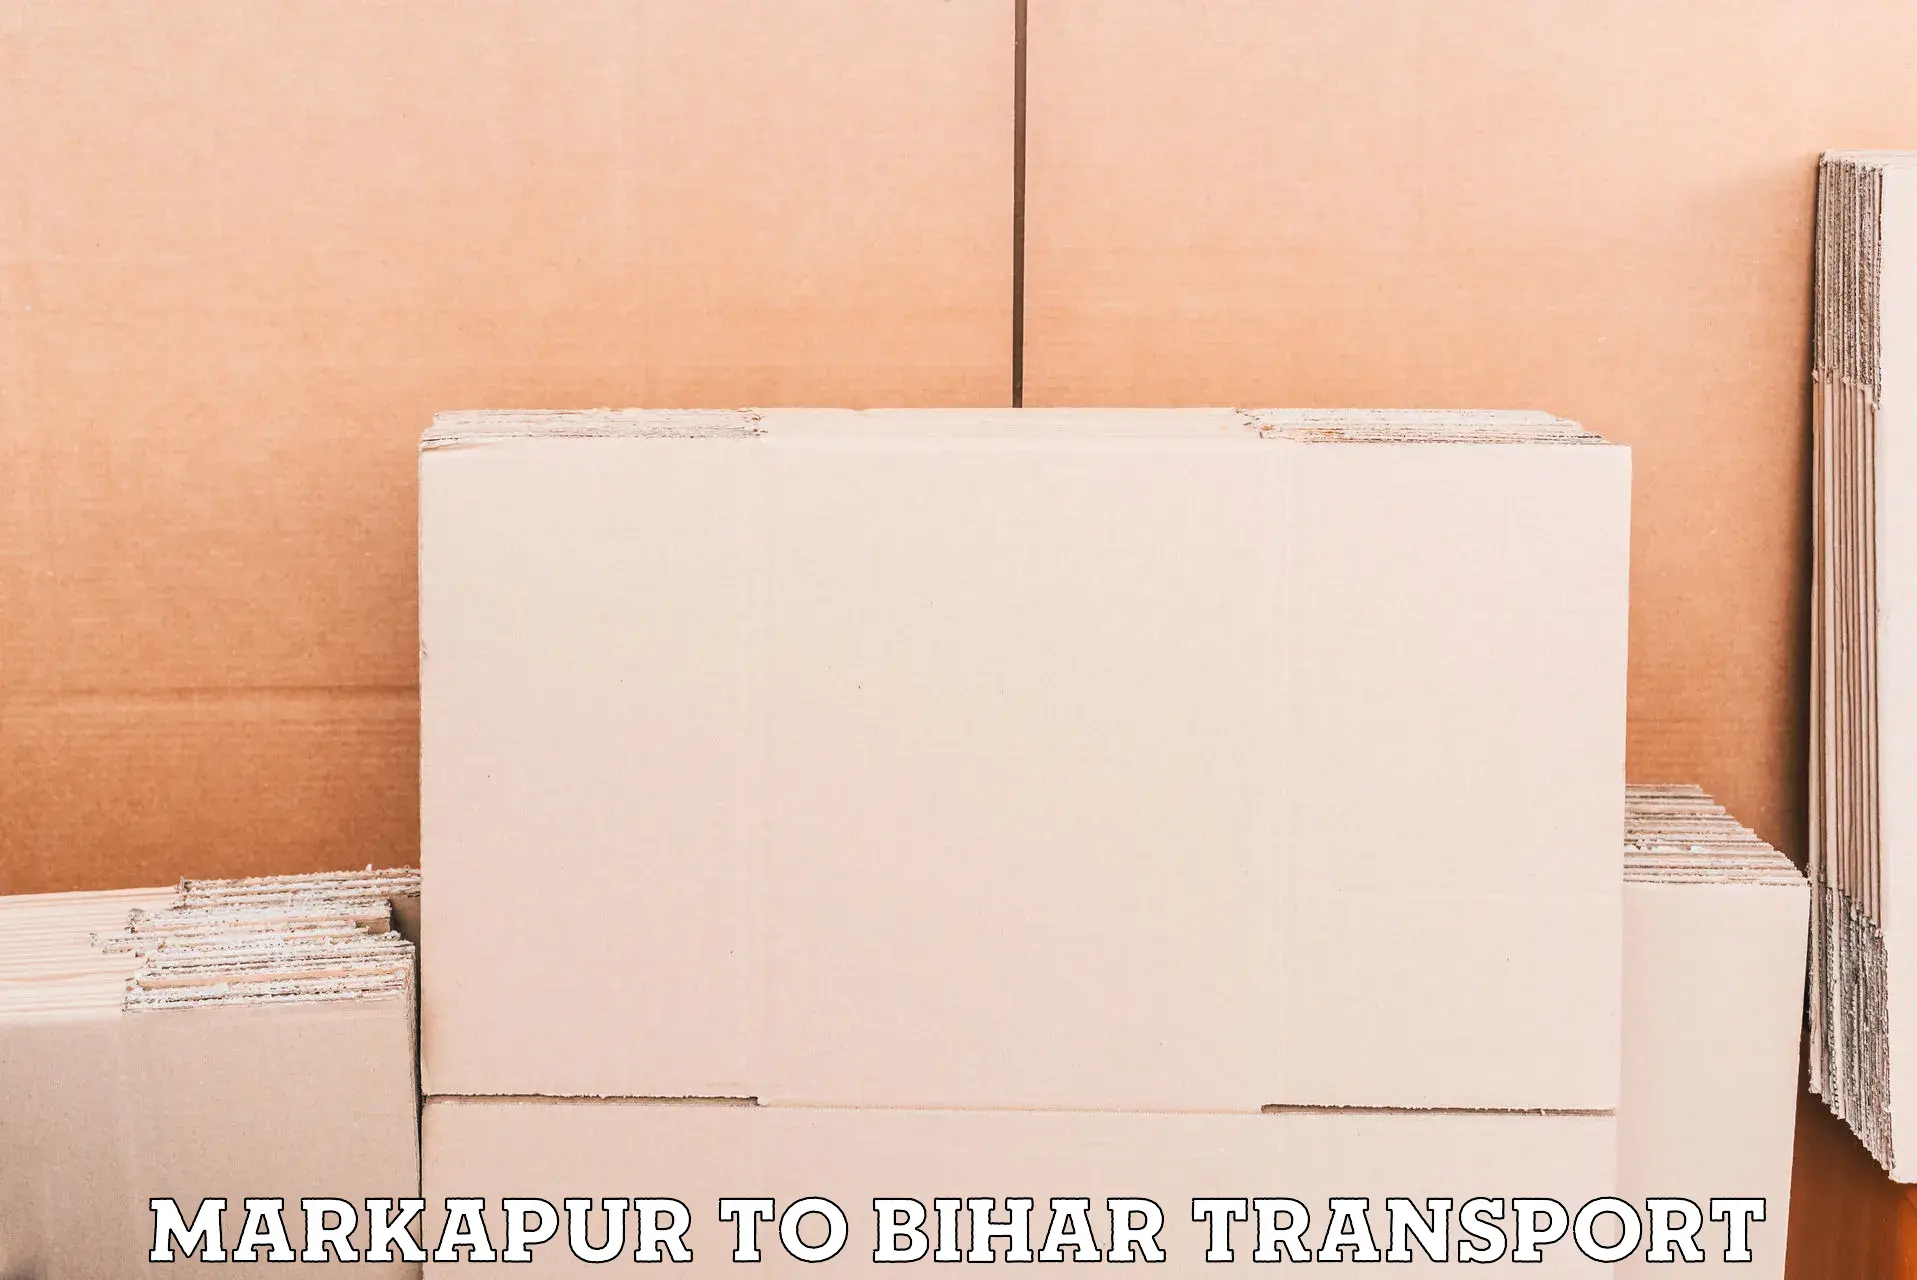 Truck transport companies in India Markapur to Marhowrah